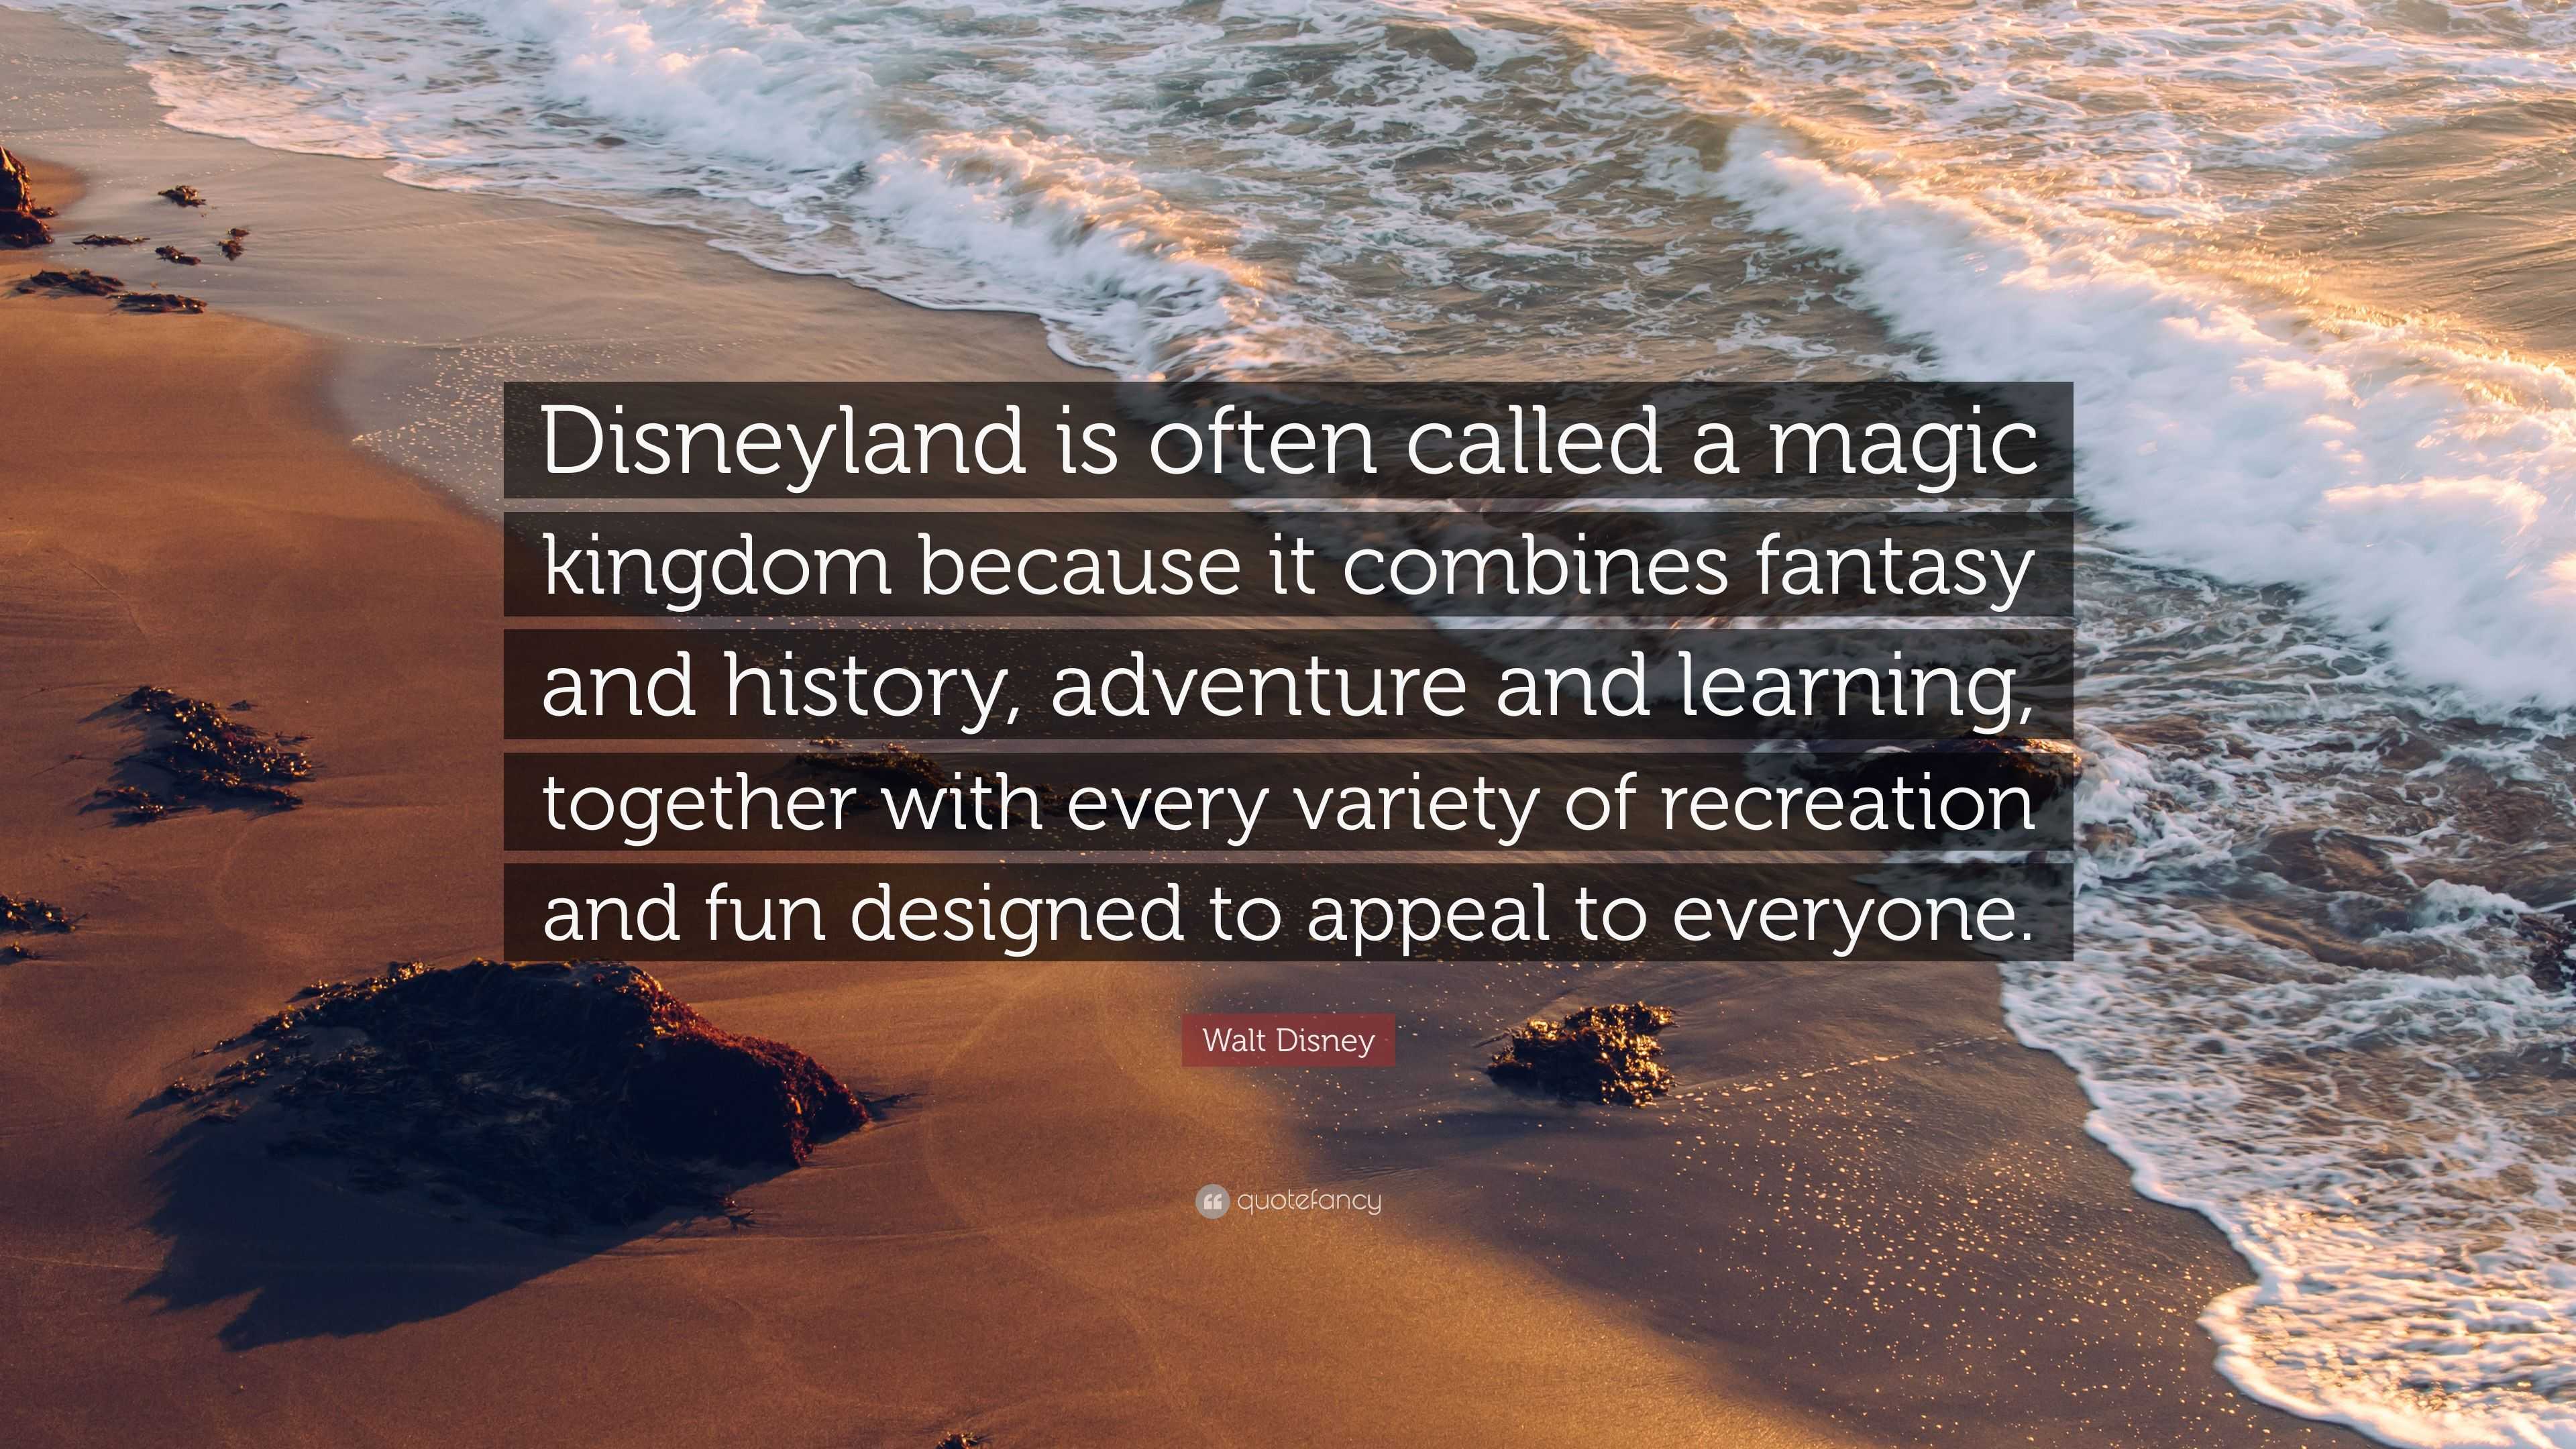 Walt Disney Quote: “Disneyland is often called a magic kingdom because